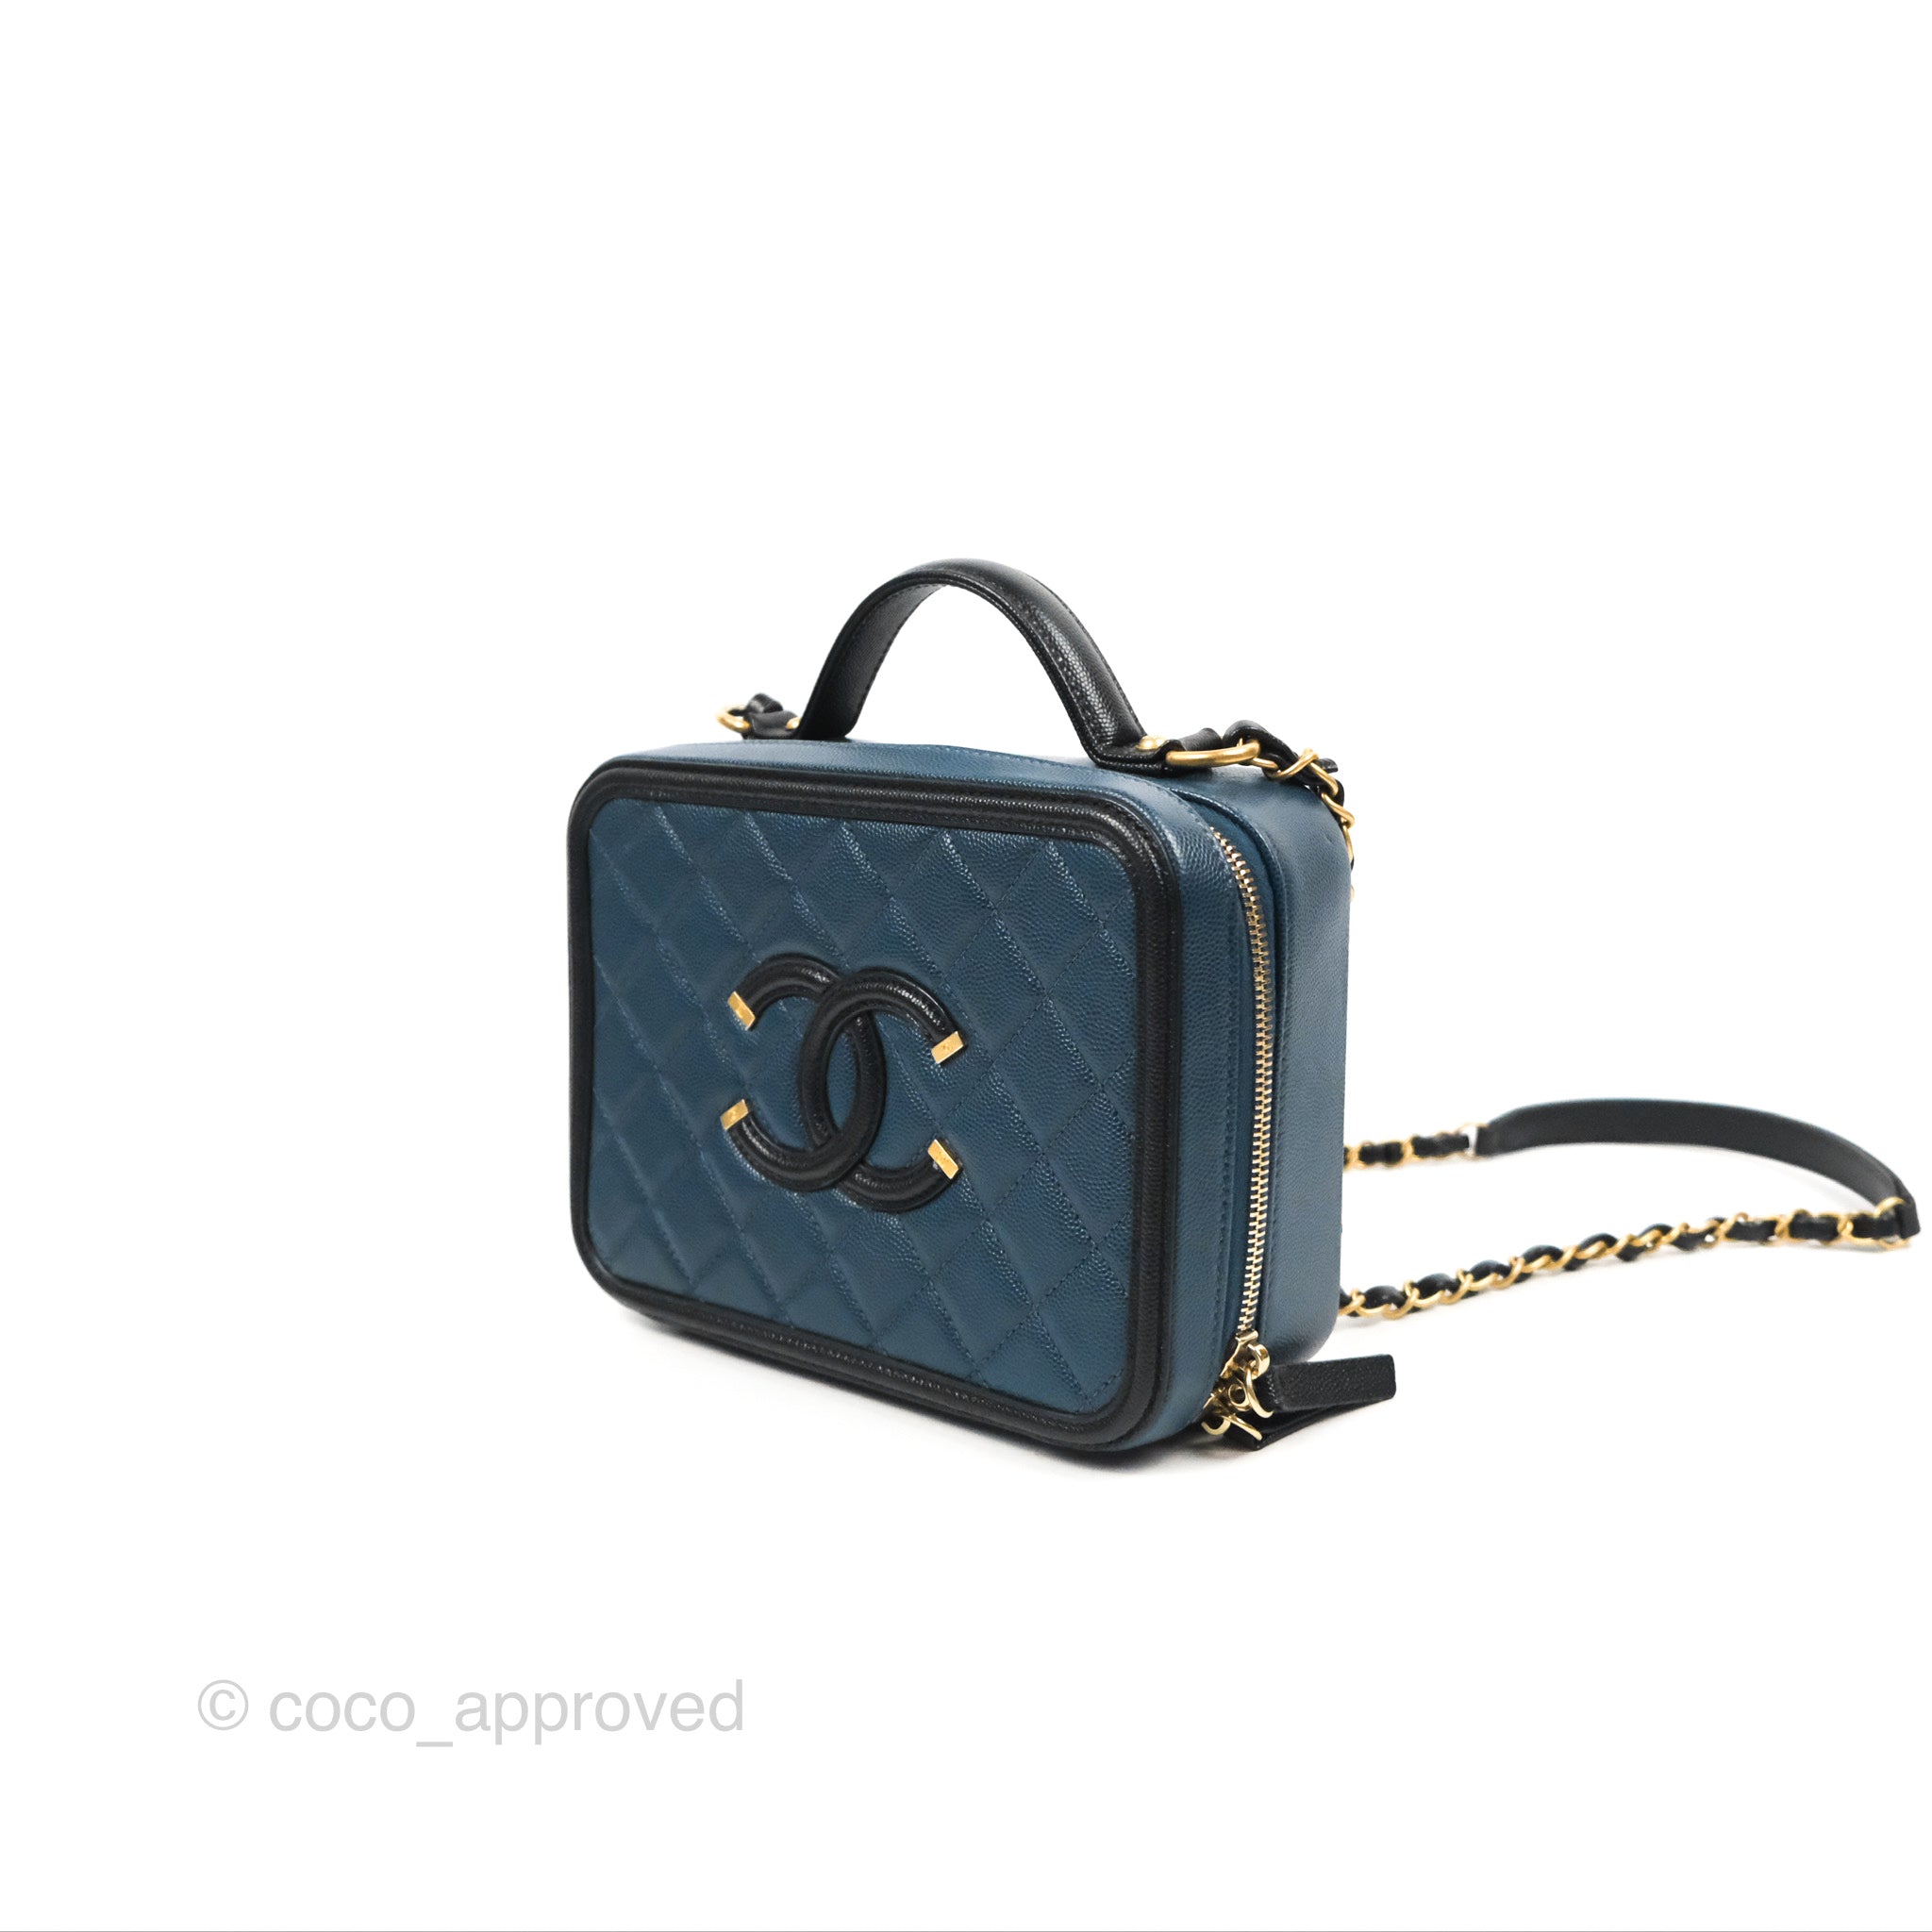 Chanel CC Filigree Vanity Case Bag Has Returned For Spring Summer